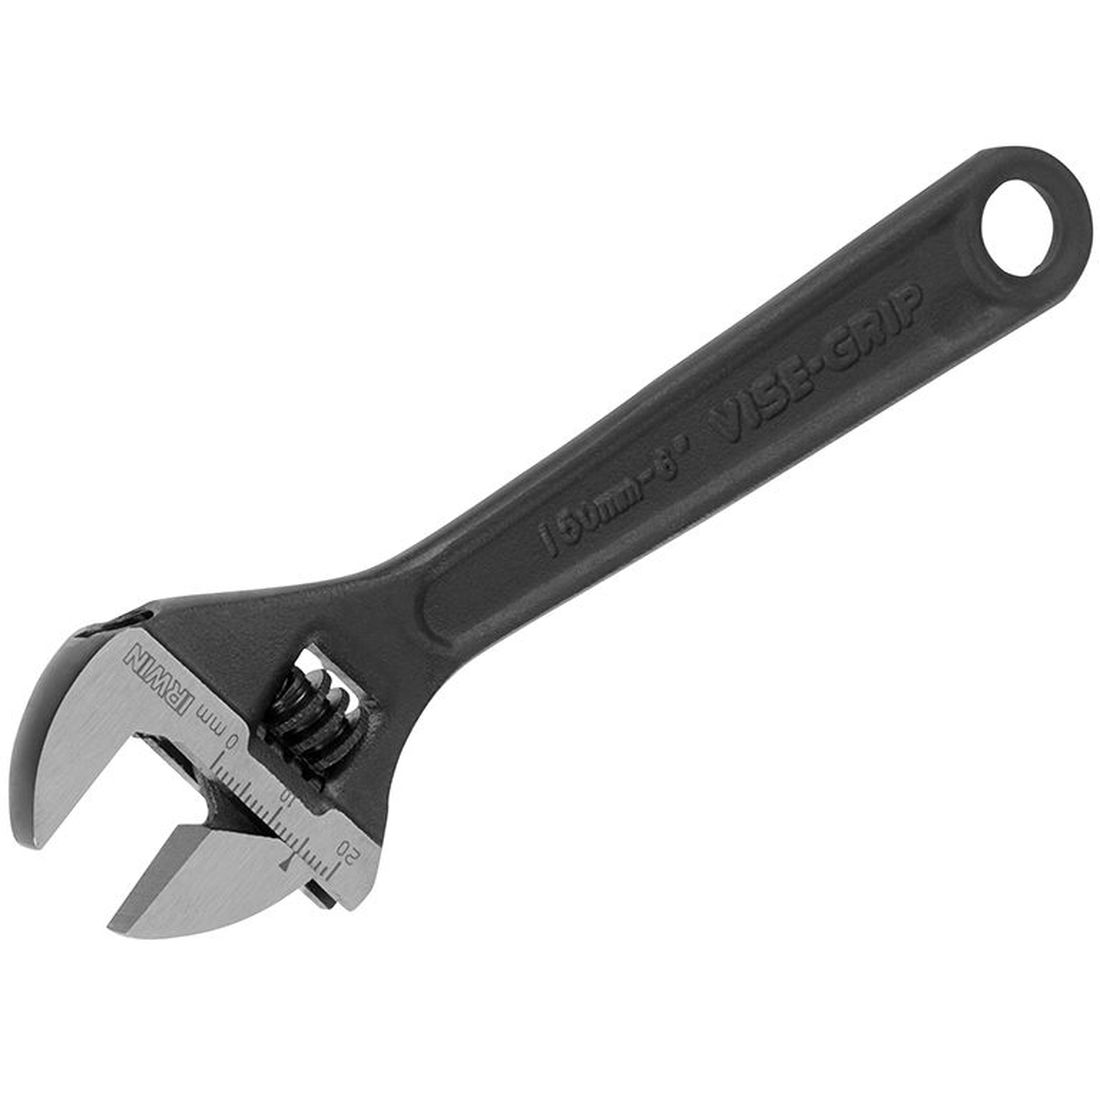 IRWIN Adjustable Wrench Steel Handle 150mm (6in)                                      